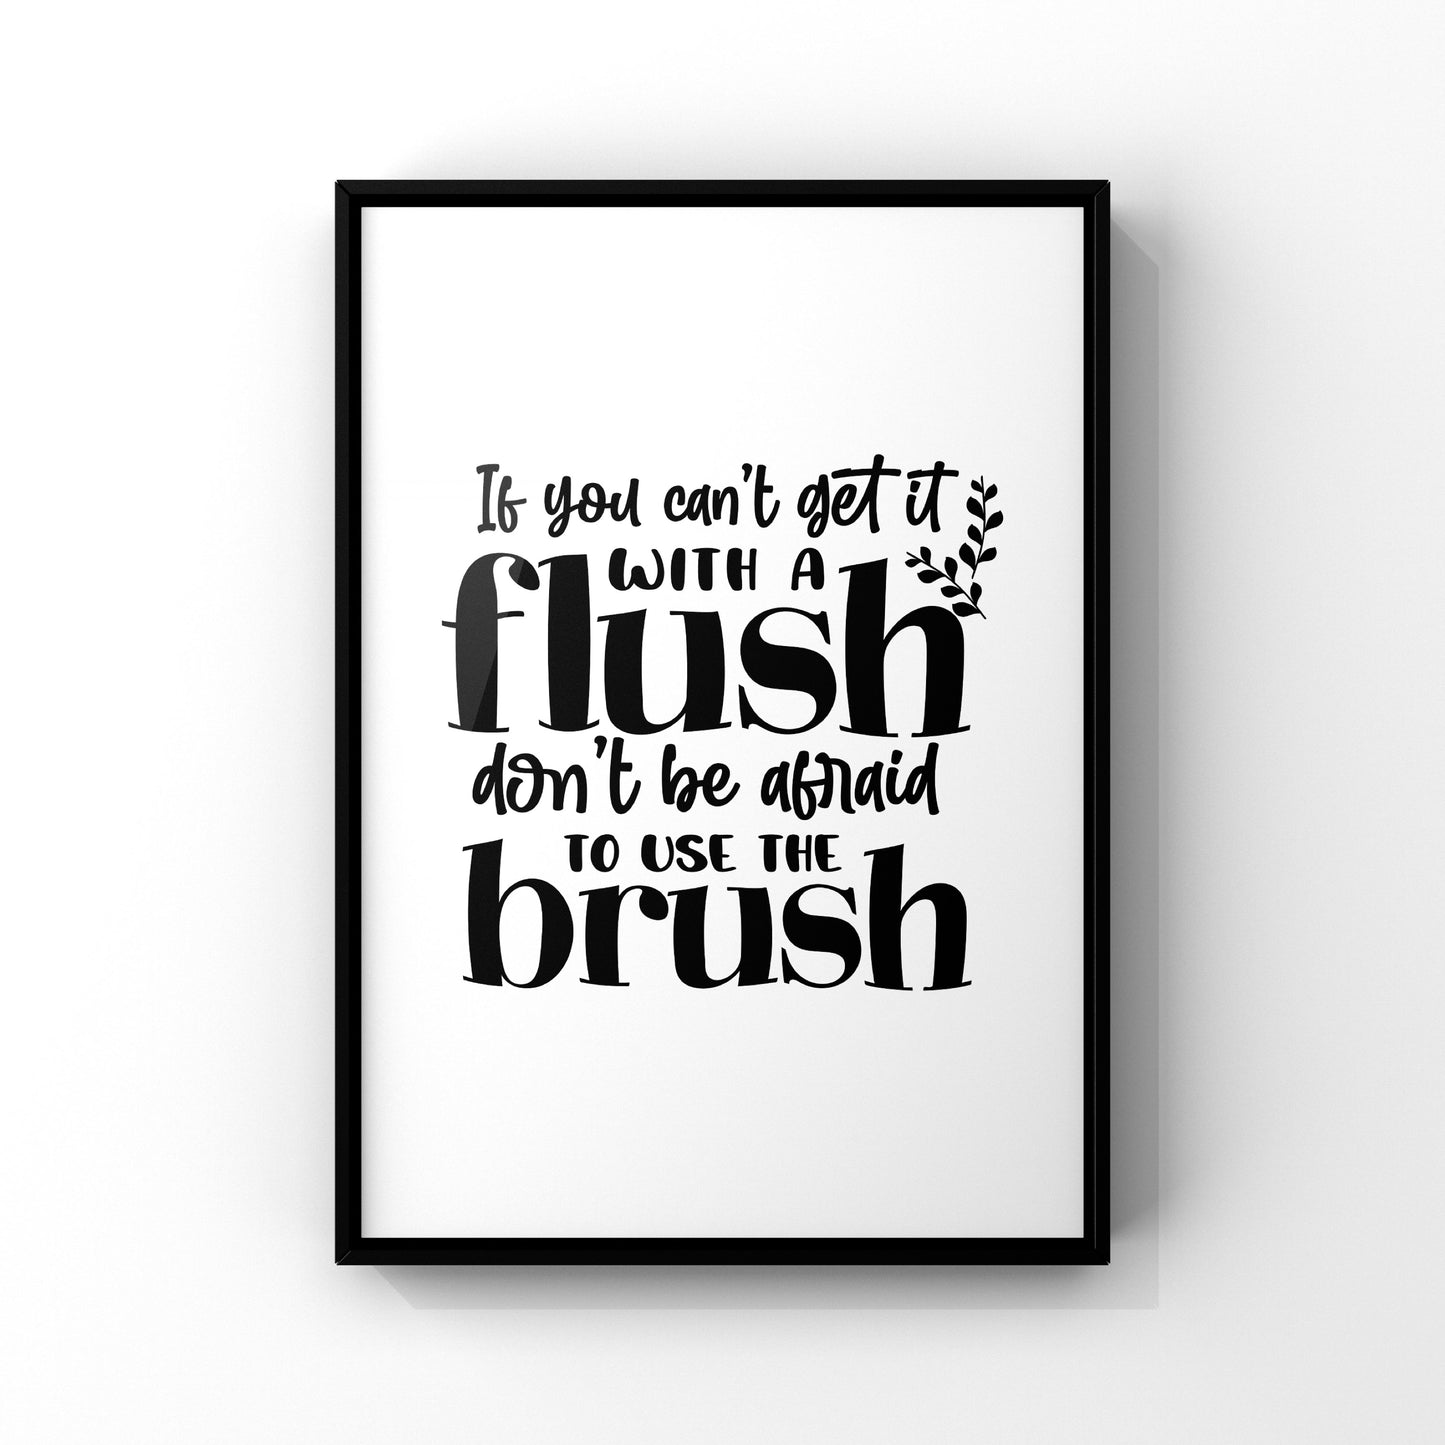 Use a brush!